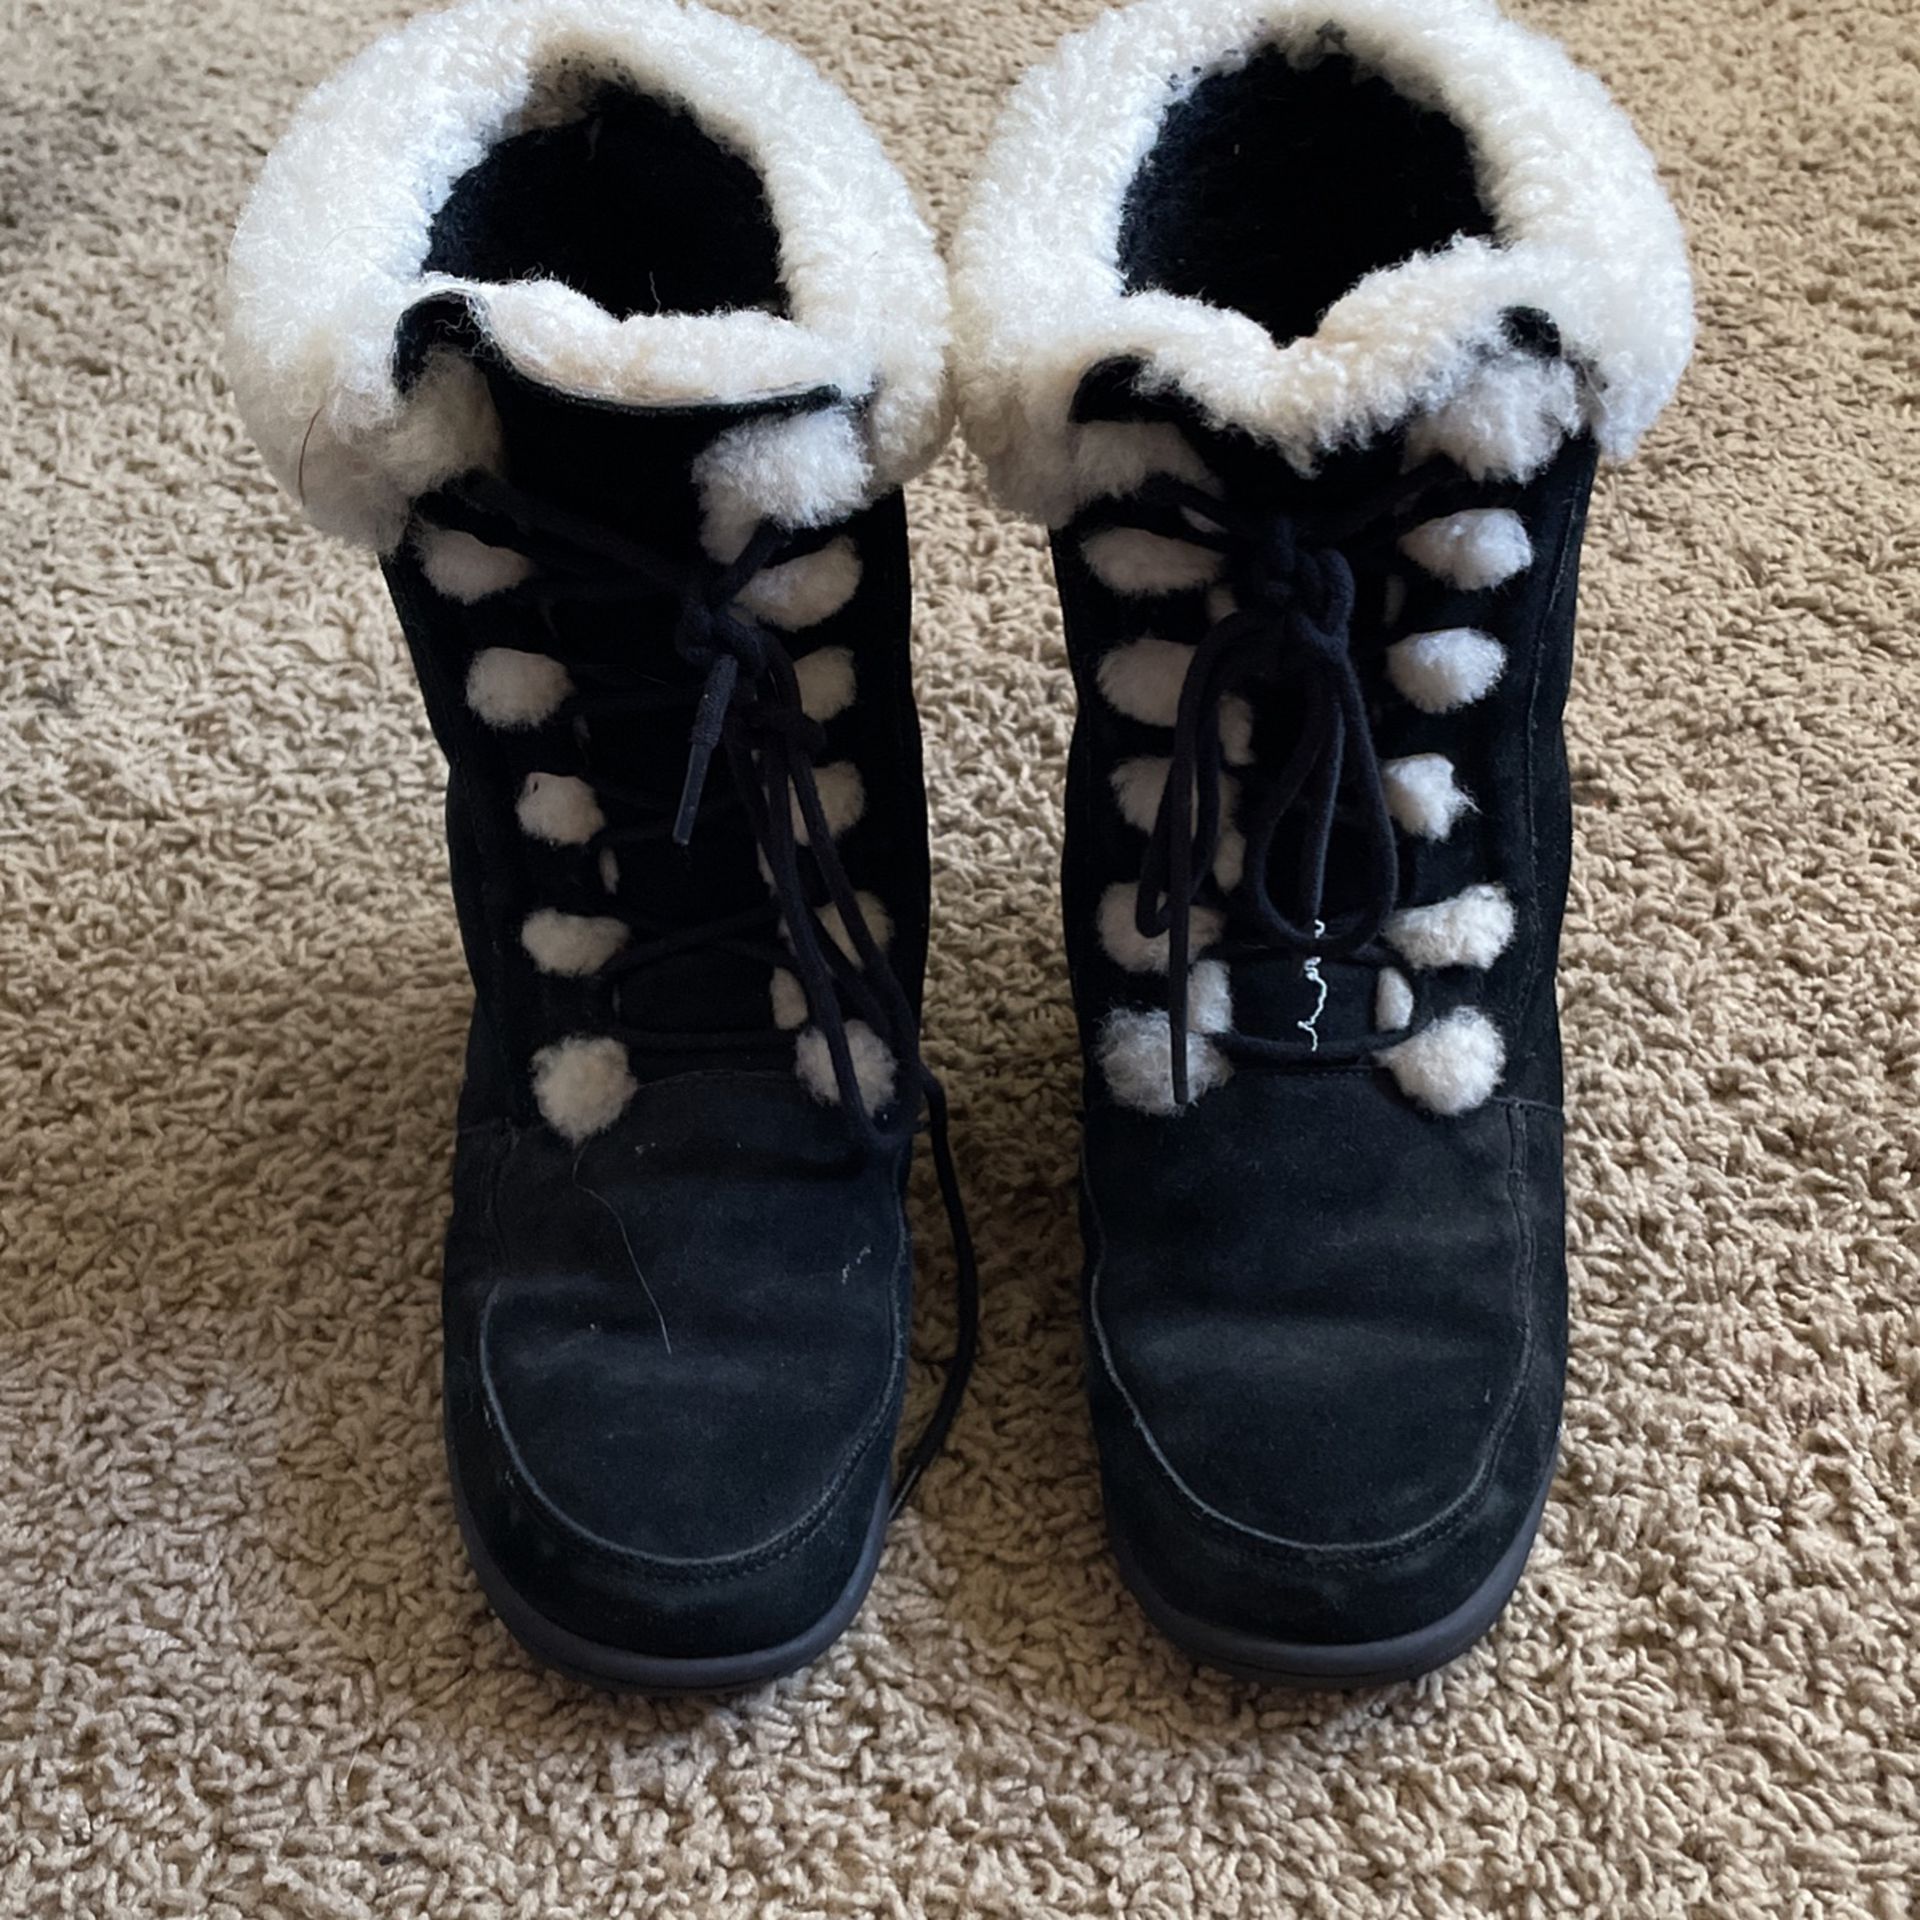 Cute snow boots